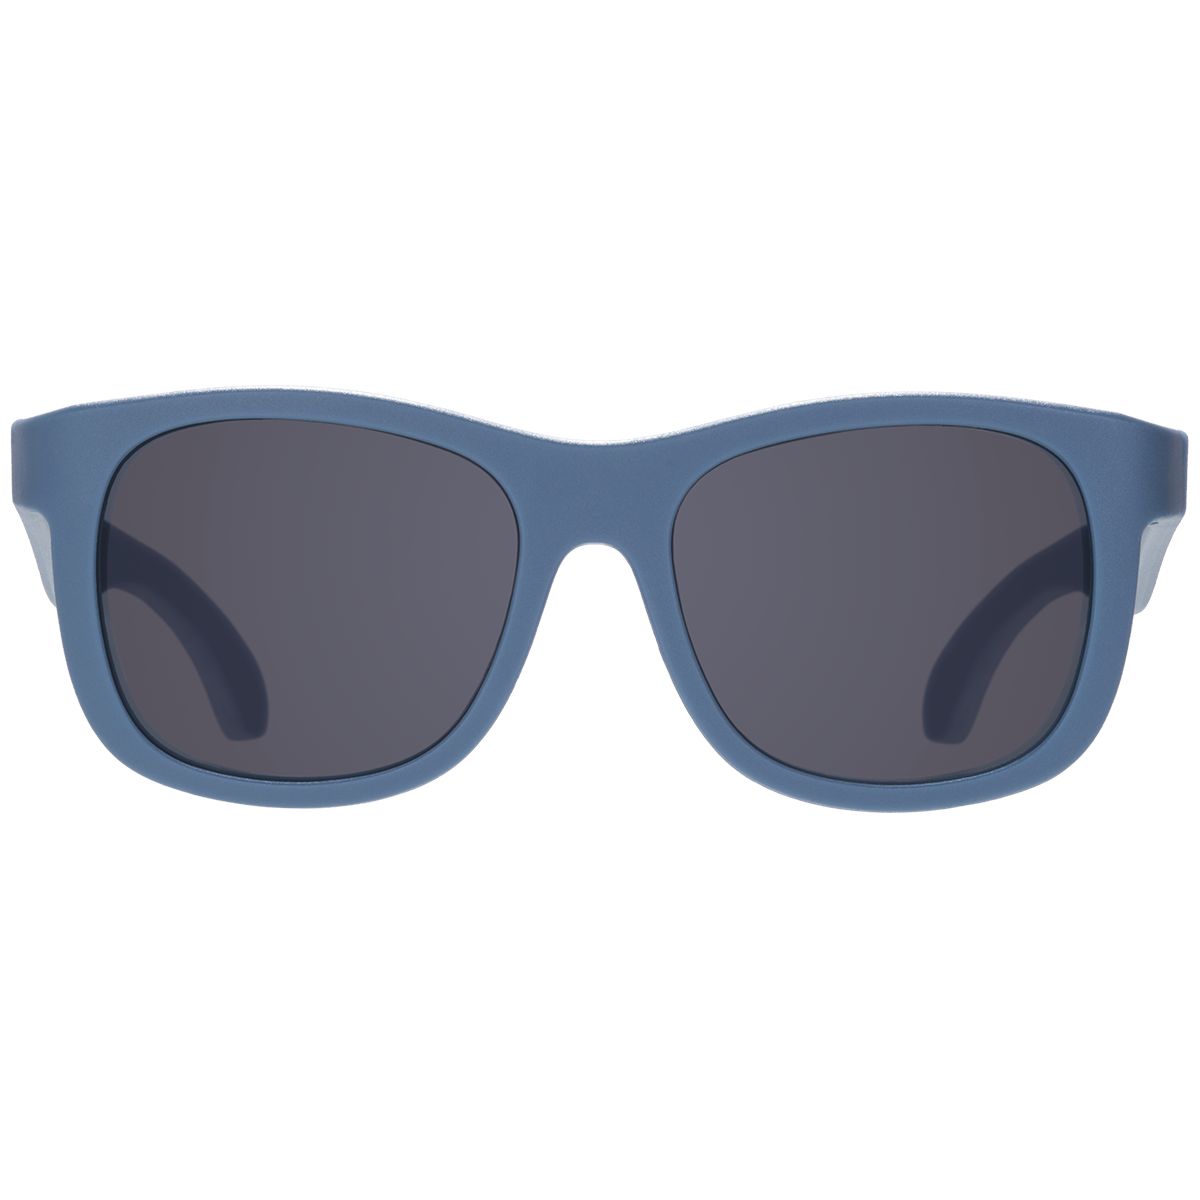 Babiators - Navigator Sunglasses in Pacific Blue: Ages 3-5